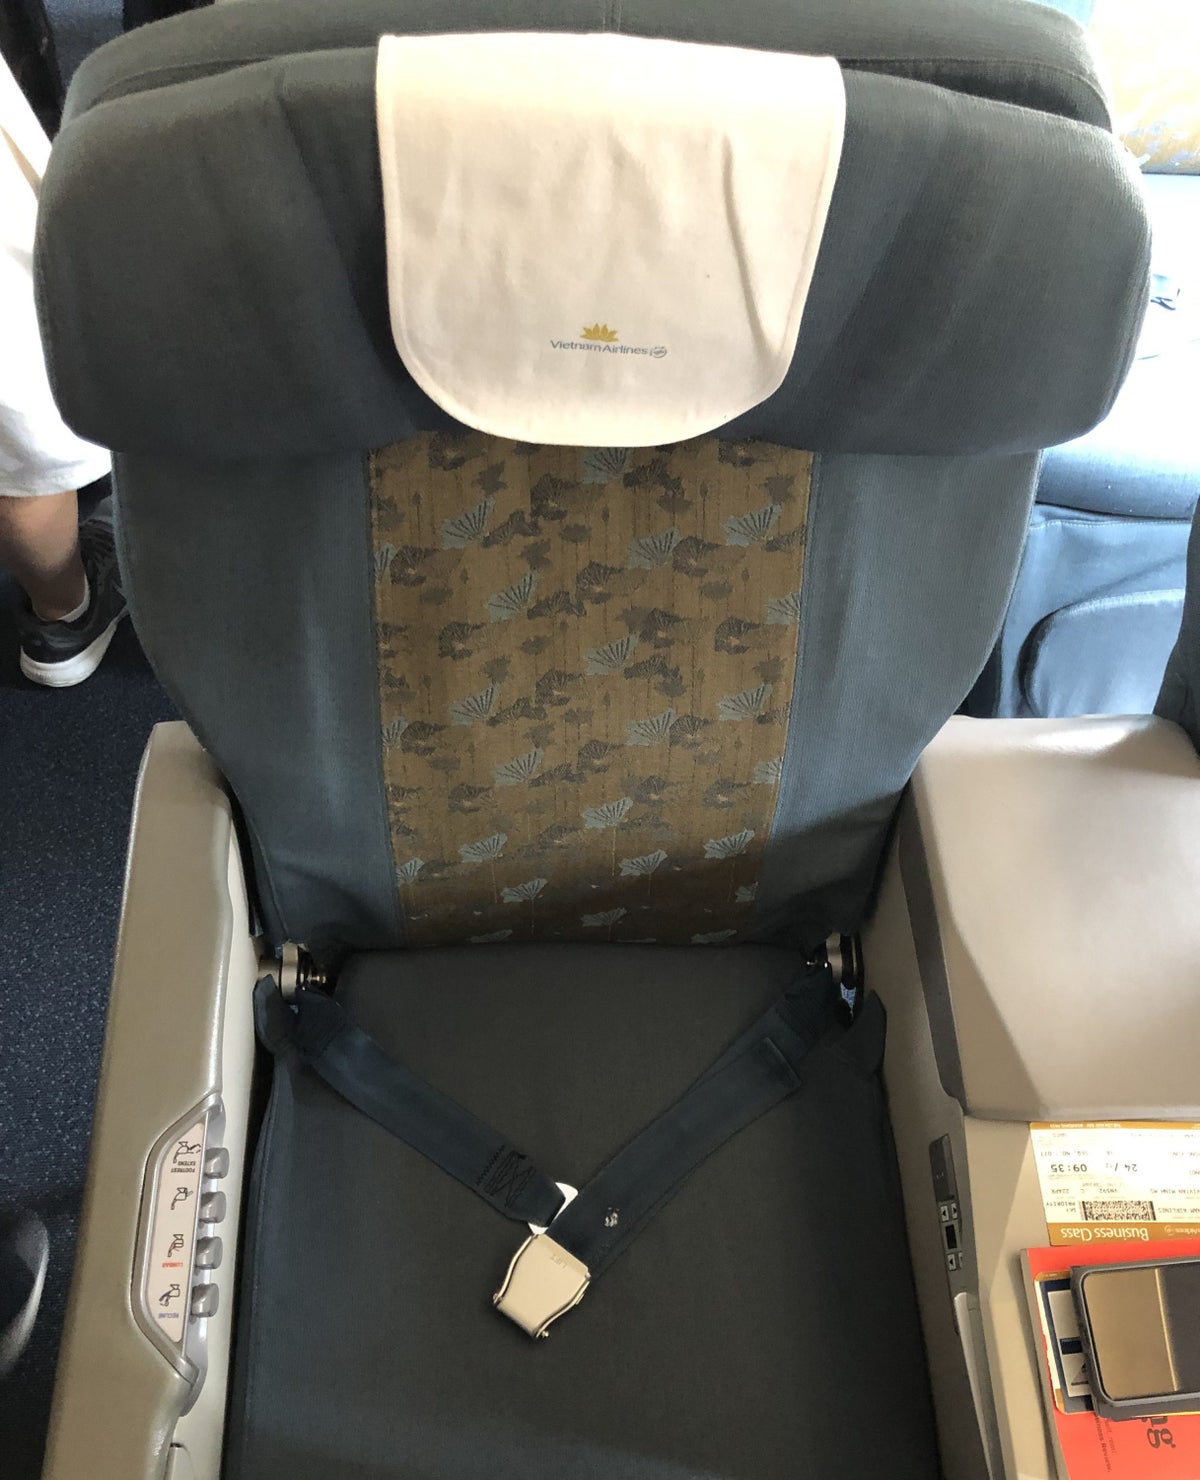 Vietnam Airlines A321 business class seat 2